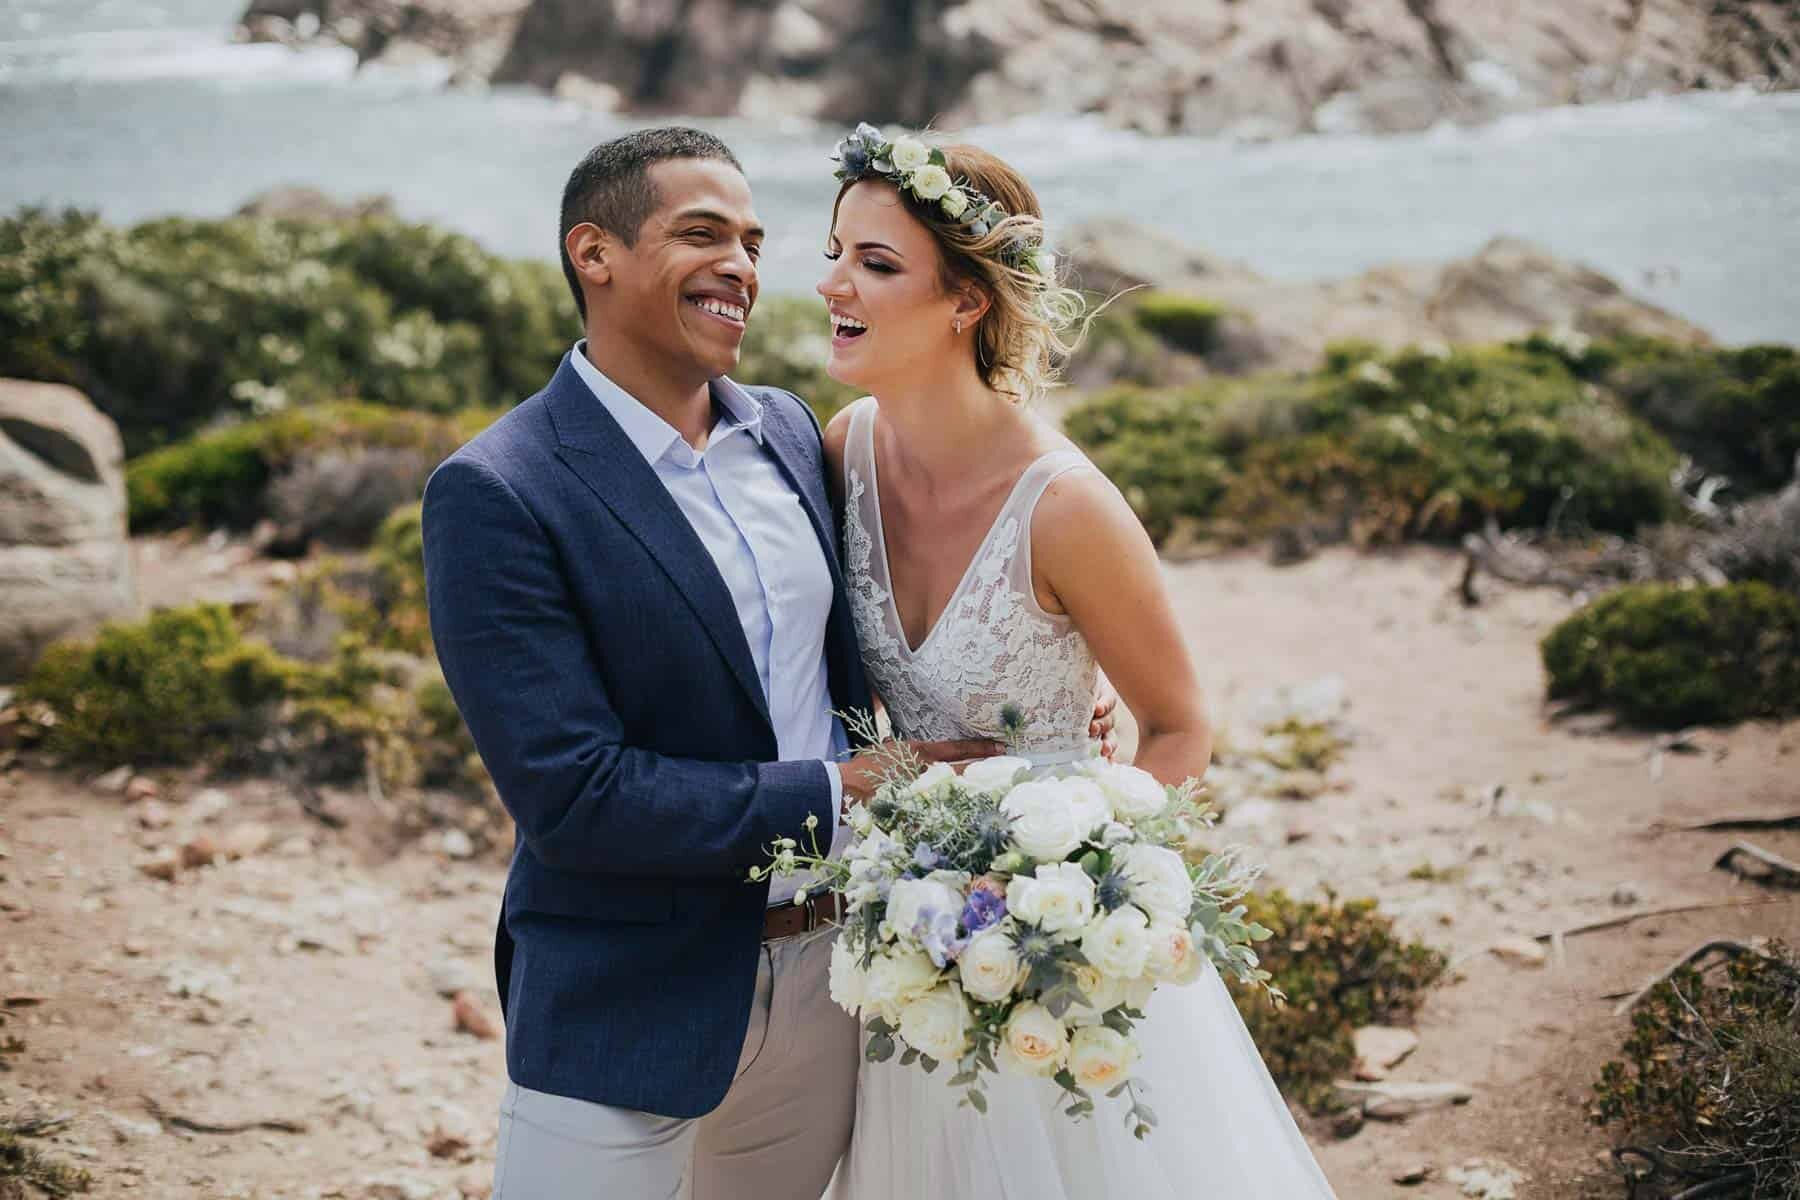 Simone Addison -  natural Perth wedding photographer